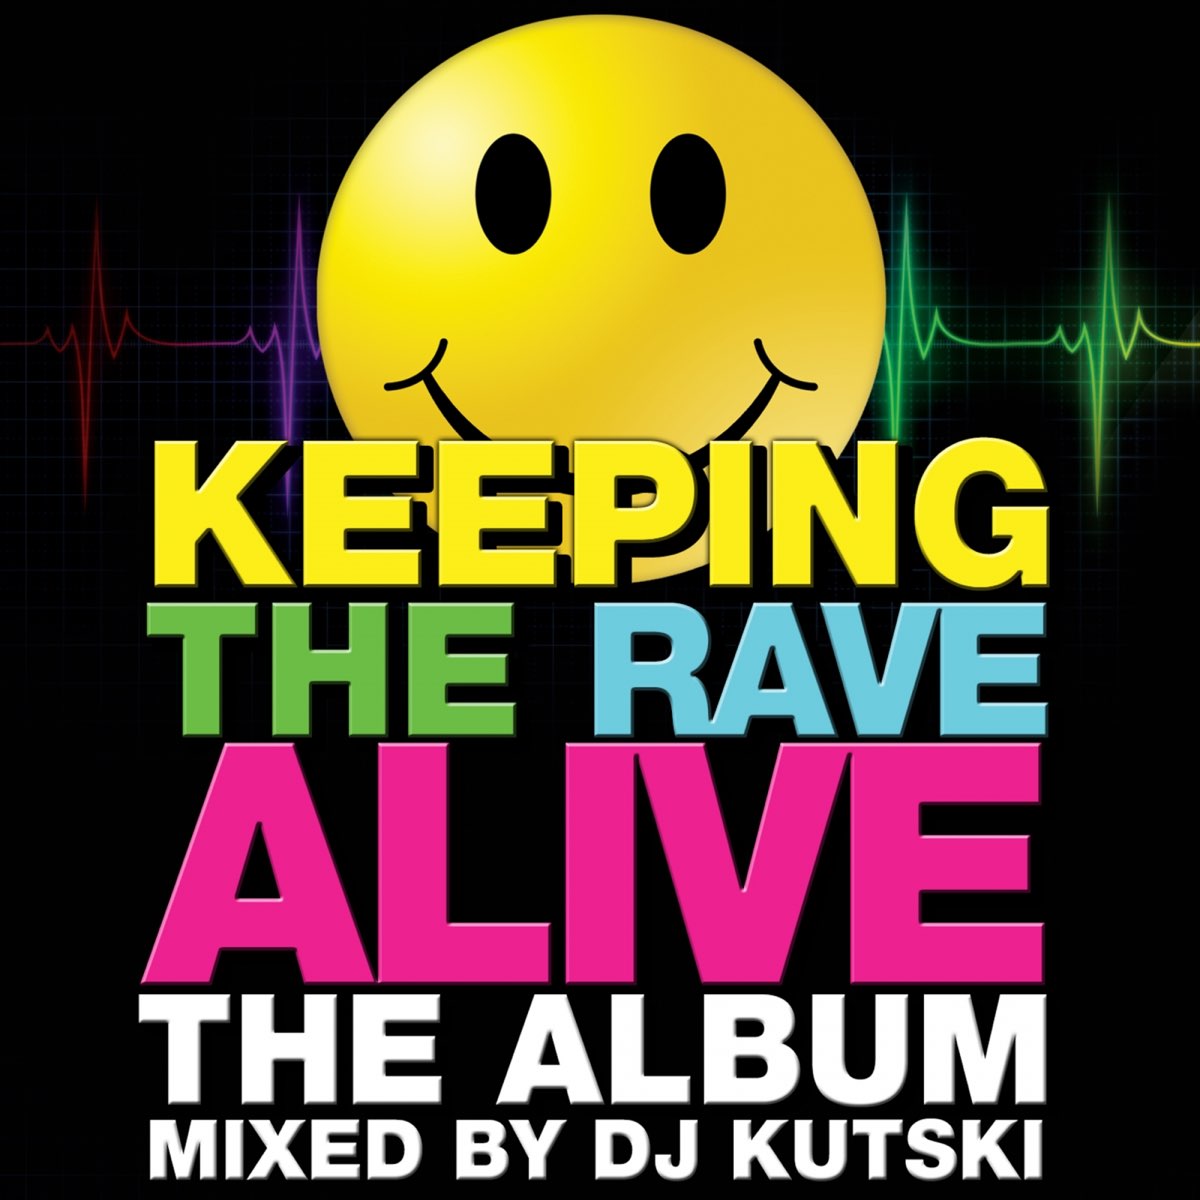 Kutski – keeping the Rave Alive. Картинка save the Rave. Keeping the Rave Alive 2022 album. "All the Rave".